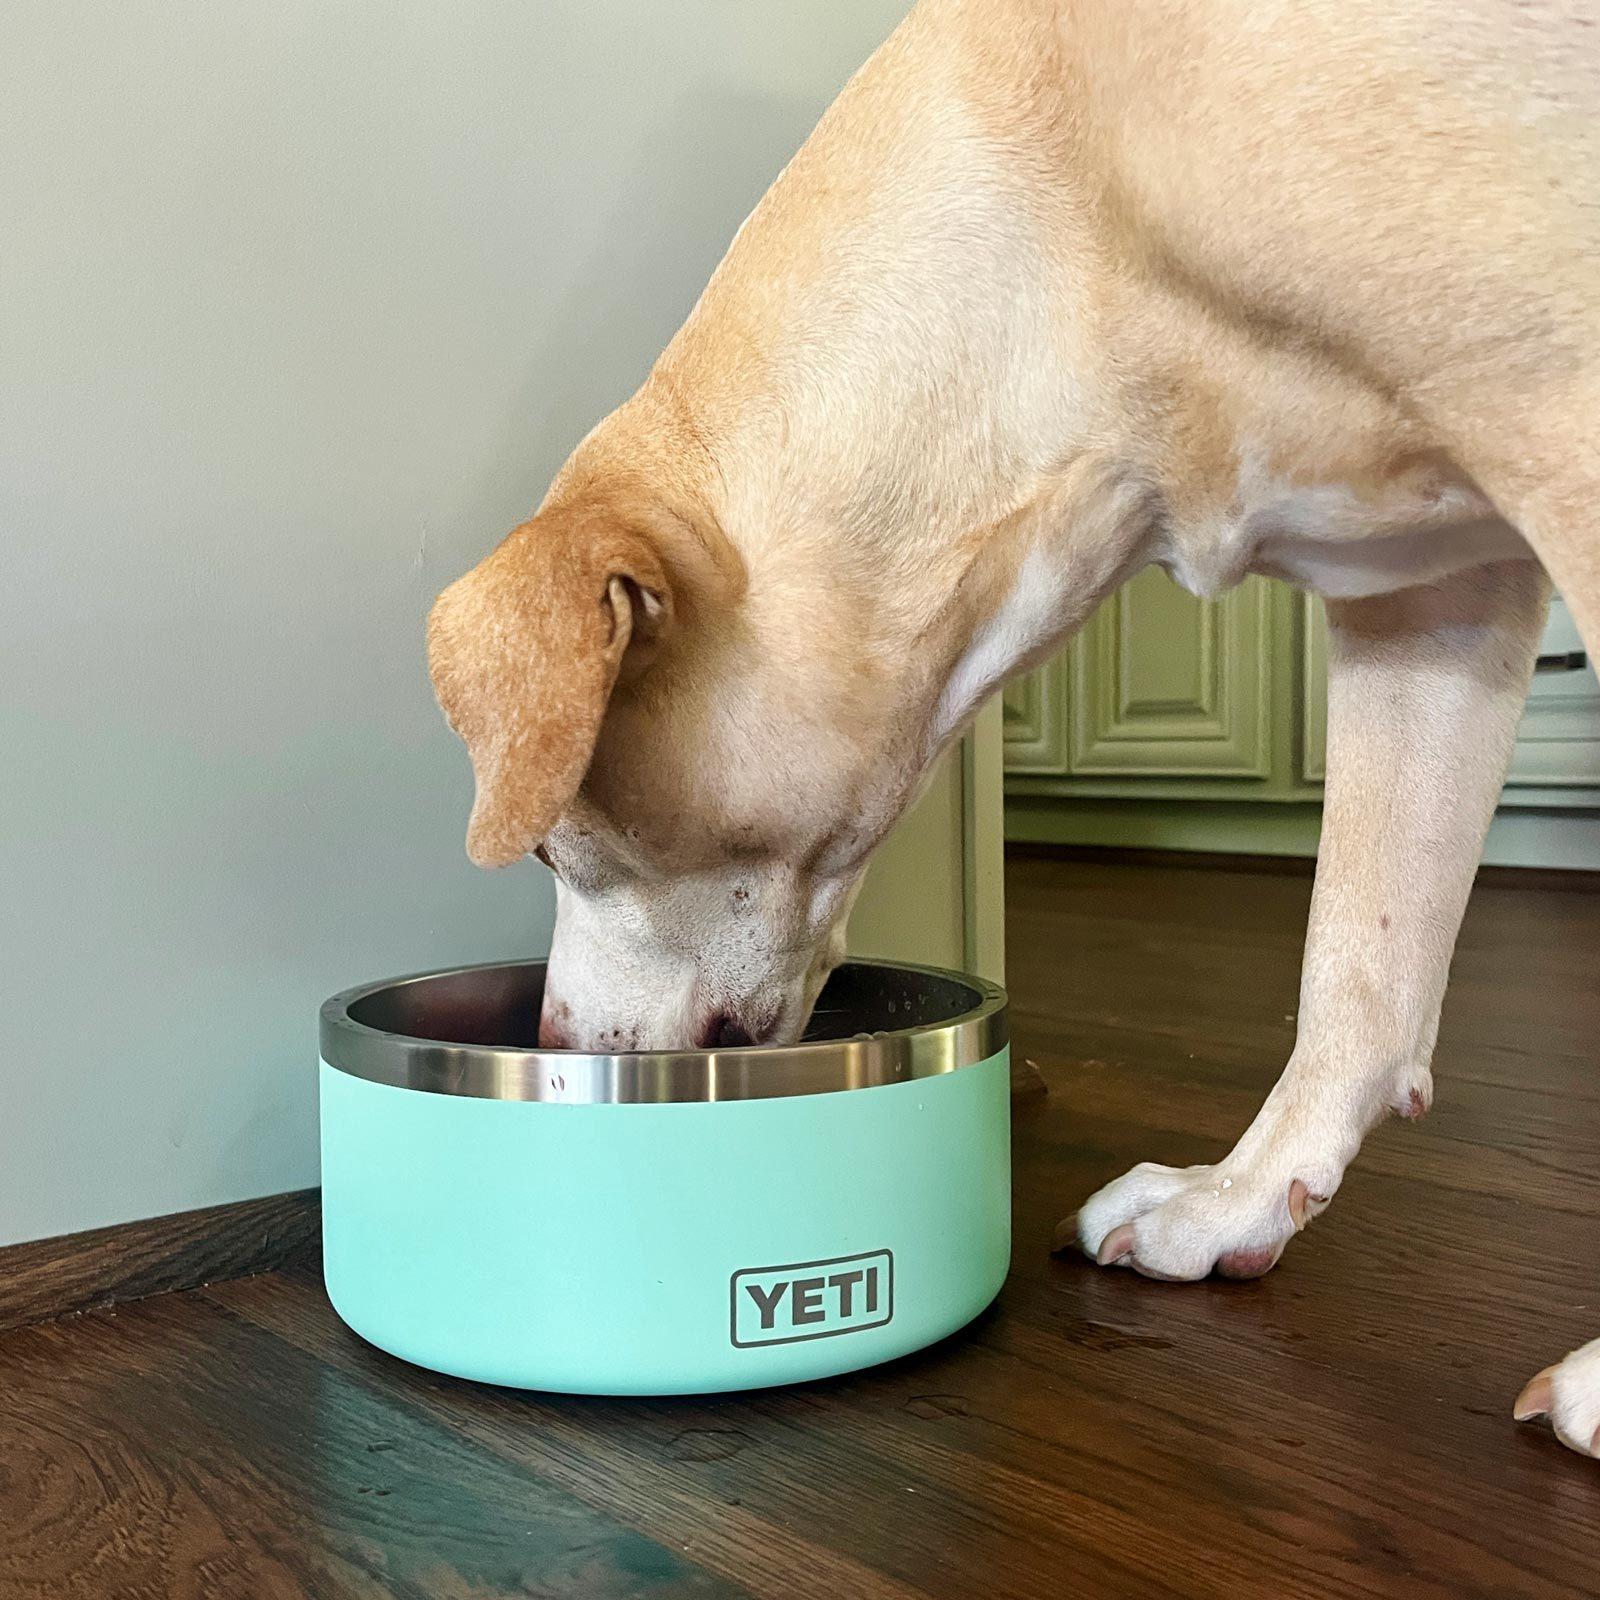 YETI Boomer Dog Bowl Review: Is This YETI Dog Bowl Worth It?